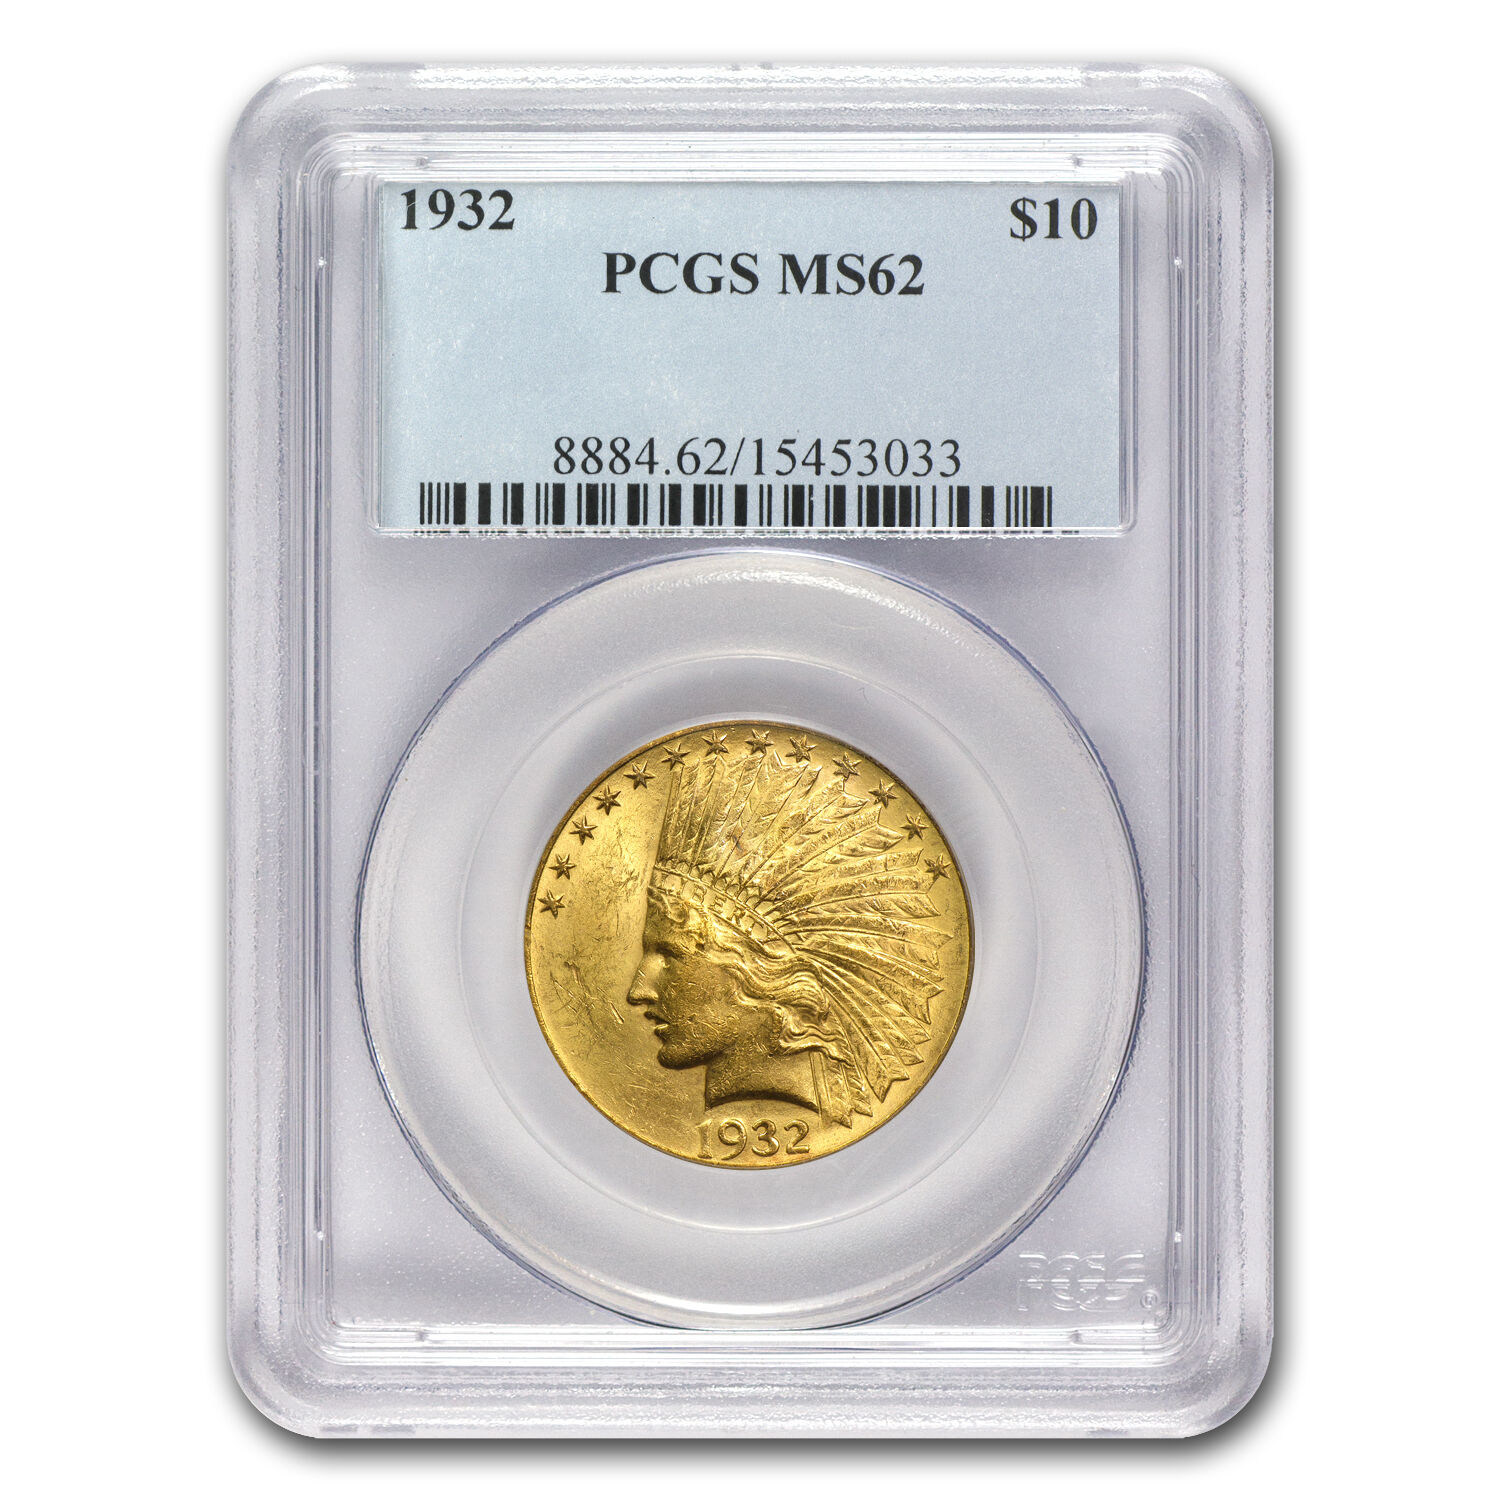 $10 Indian Gold Eagle Coin - Random Year - MS-62 PCGS - SKU #12918